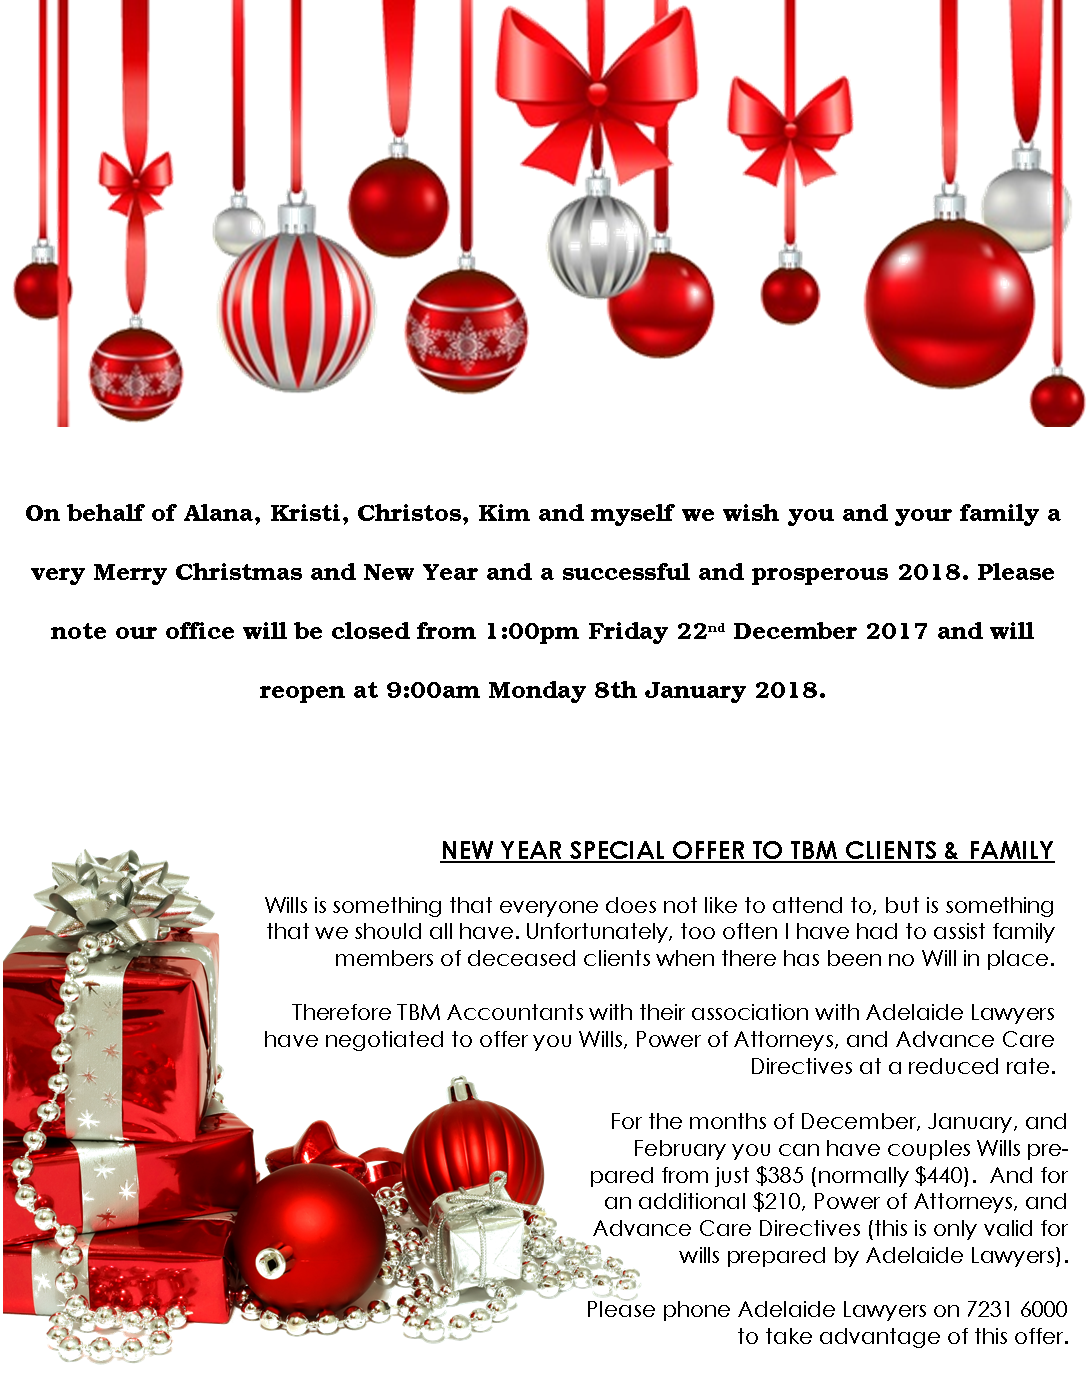 Decoration Tree Ornament Christmas Free Transparent Image HD Clipart